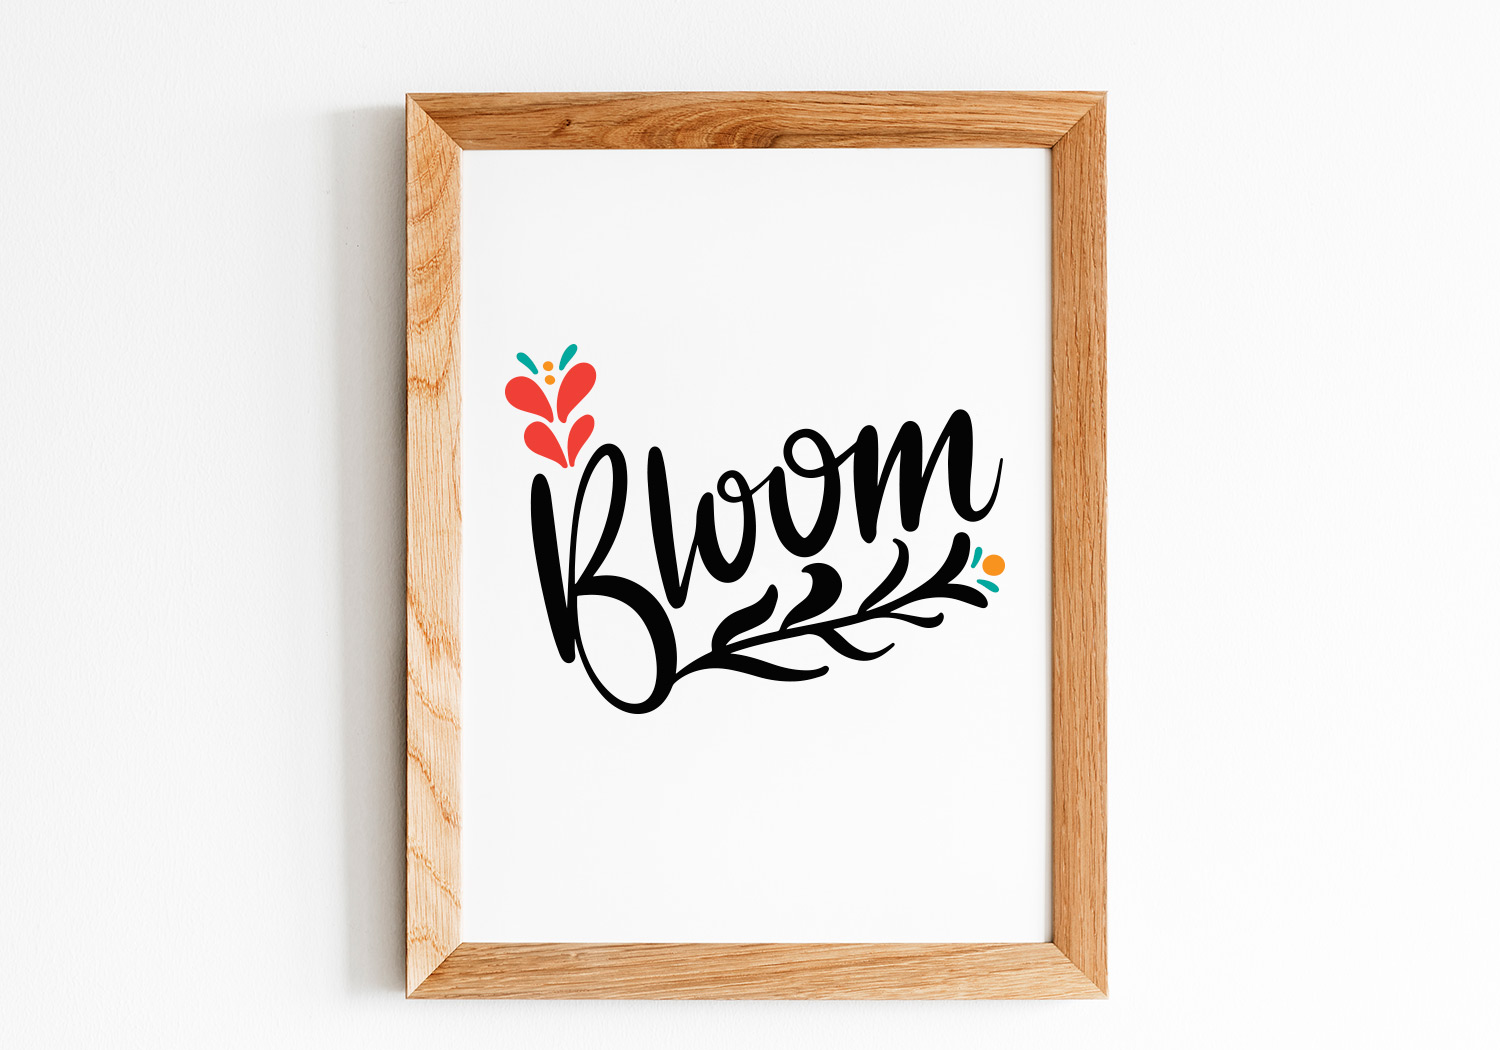 Free Bloom SVG